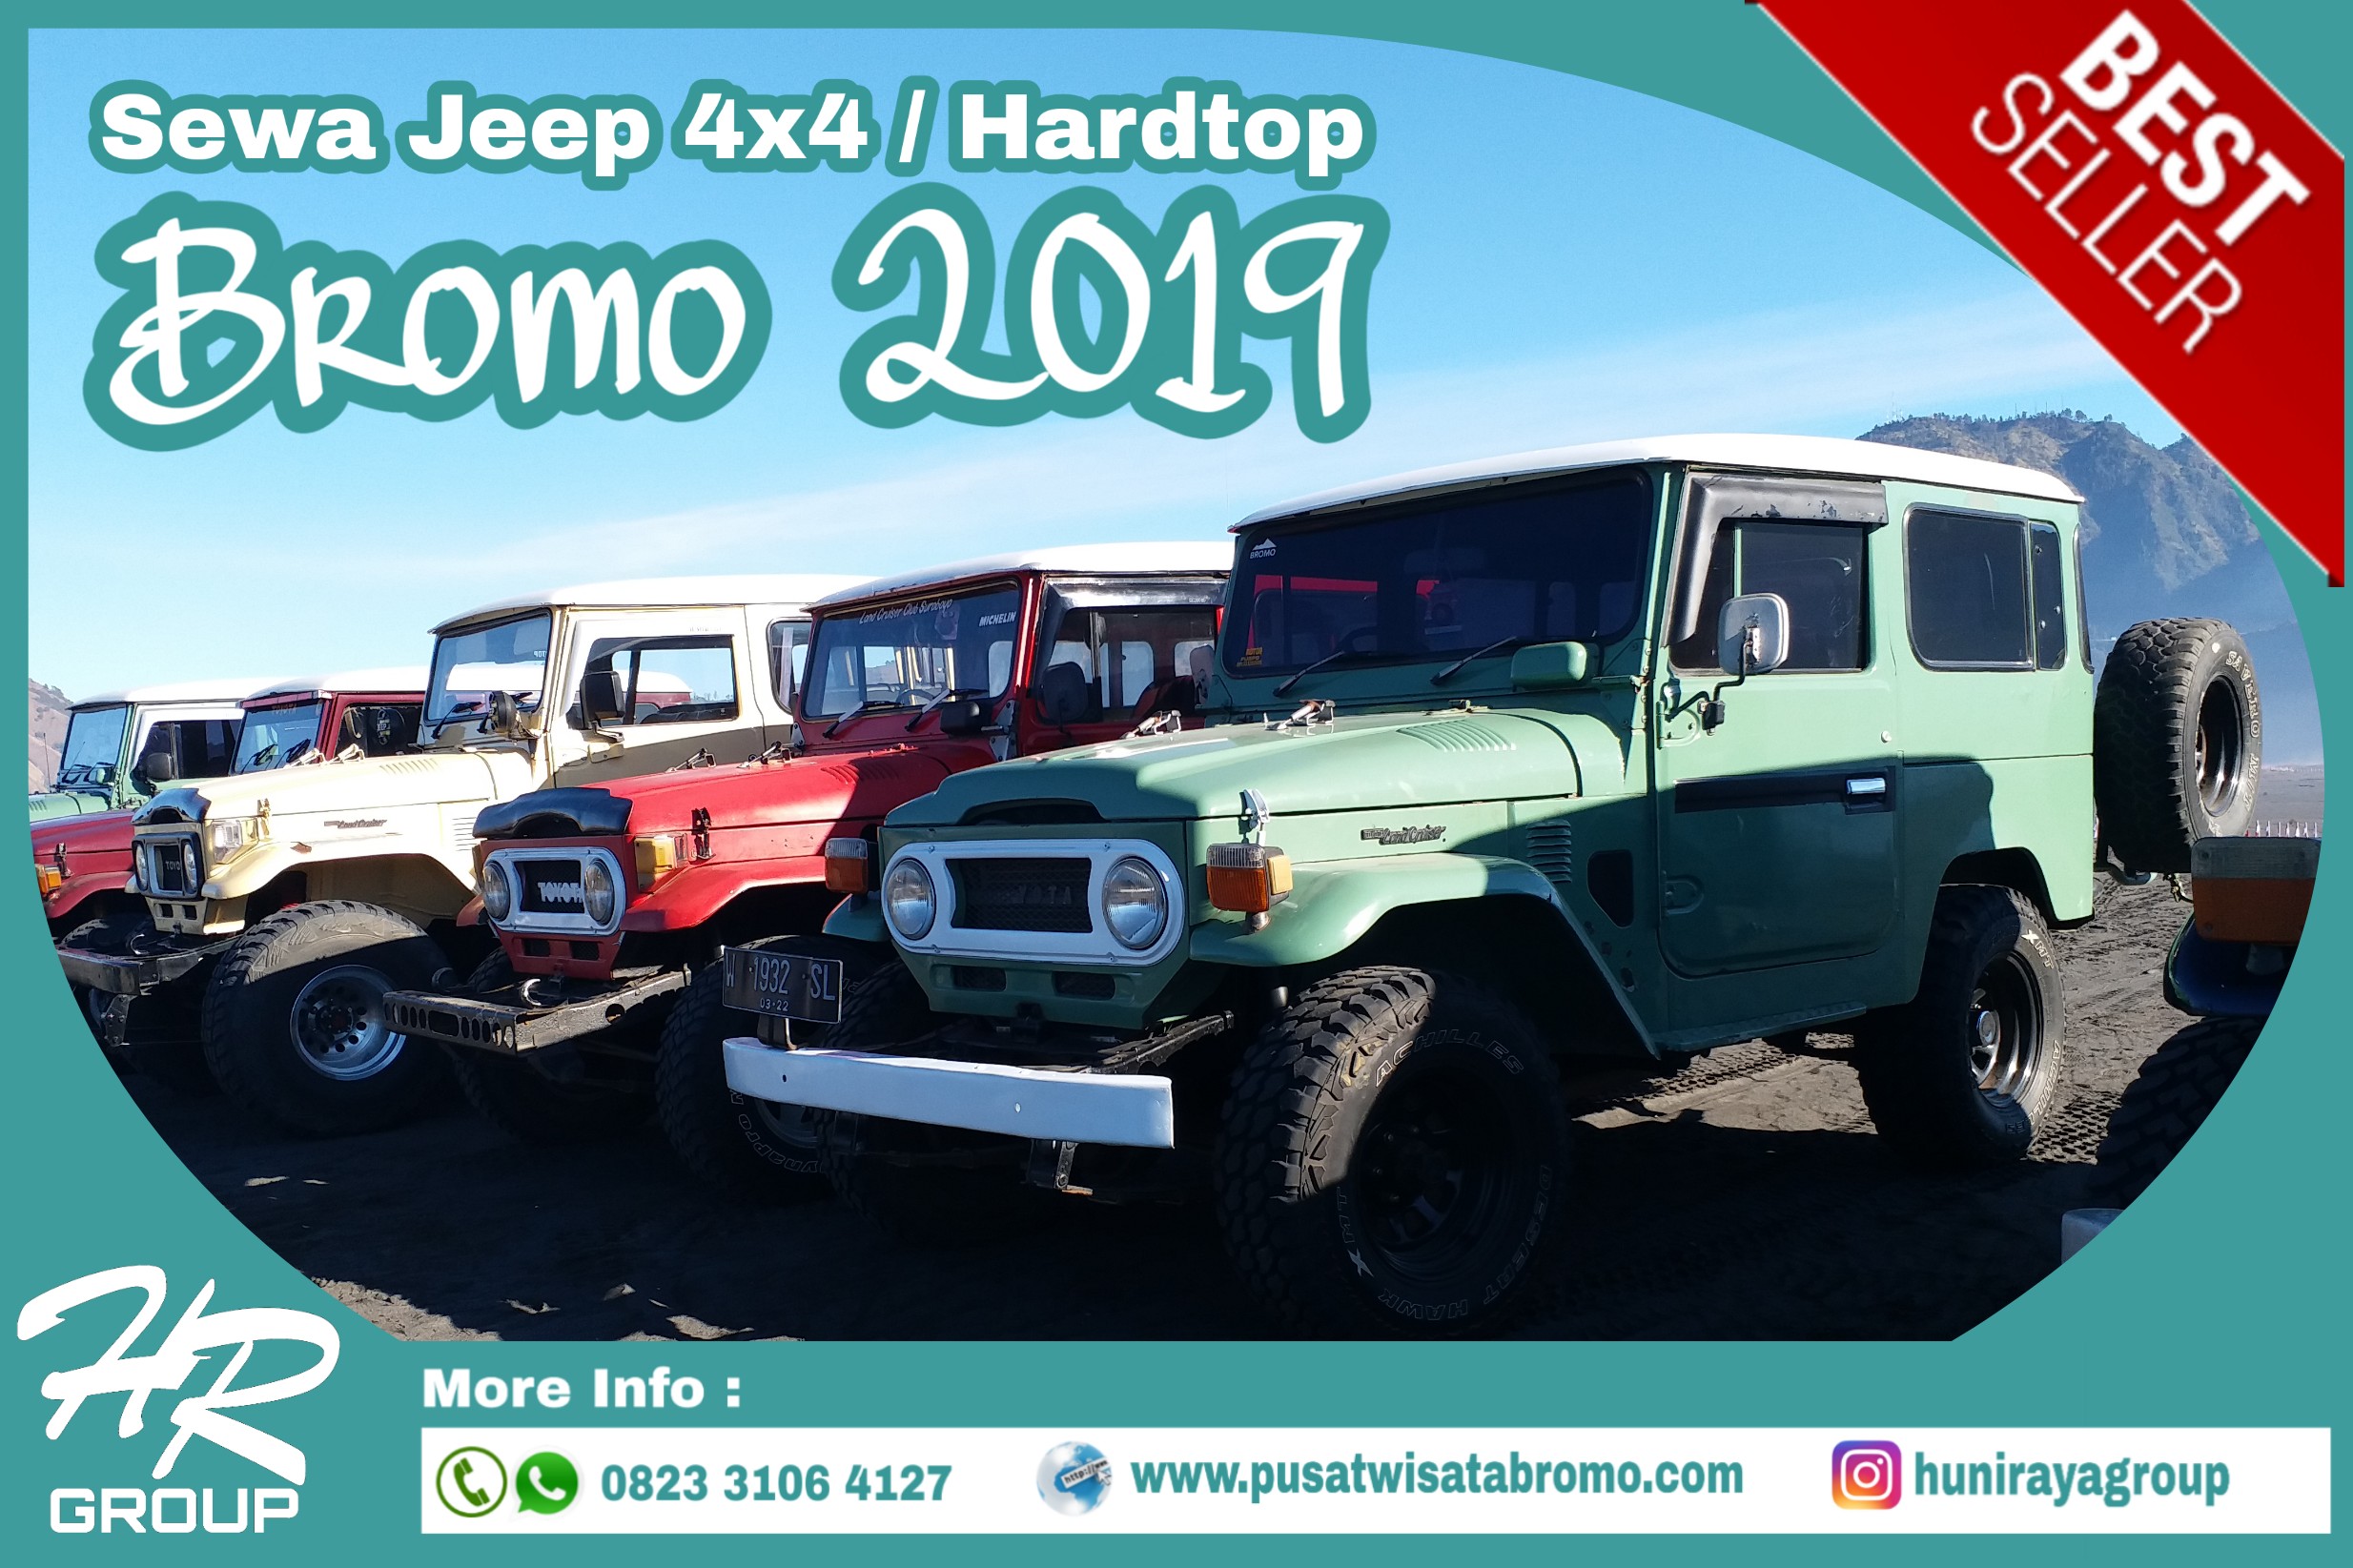 Sewa Jeep Bromo Terbaru 2019 | PusatWisataBromo.com By Huni Raya Group